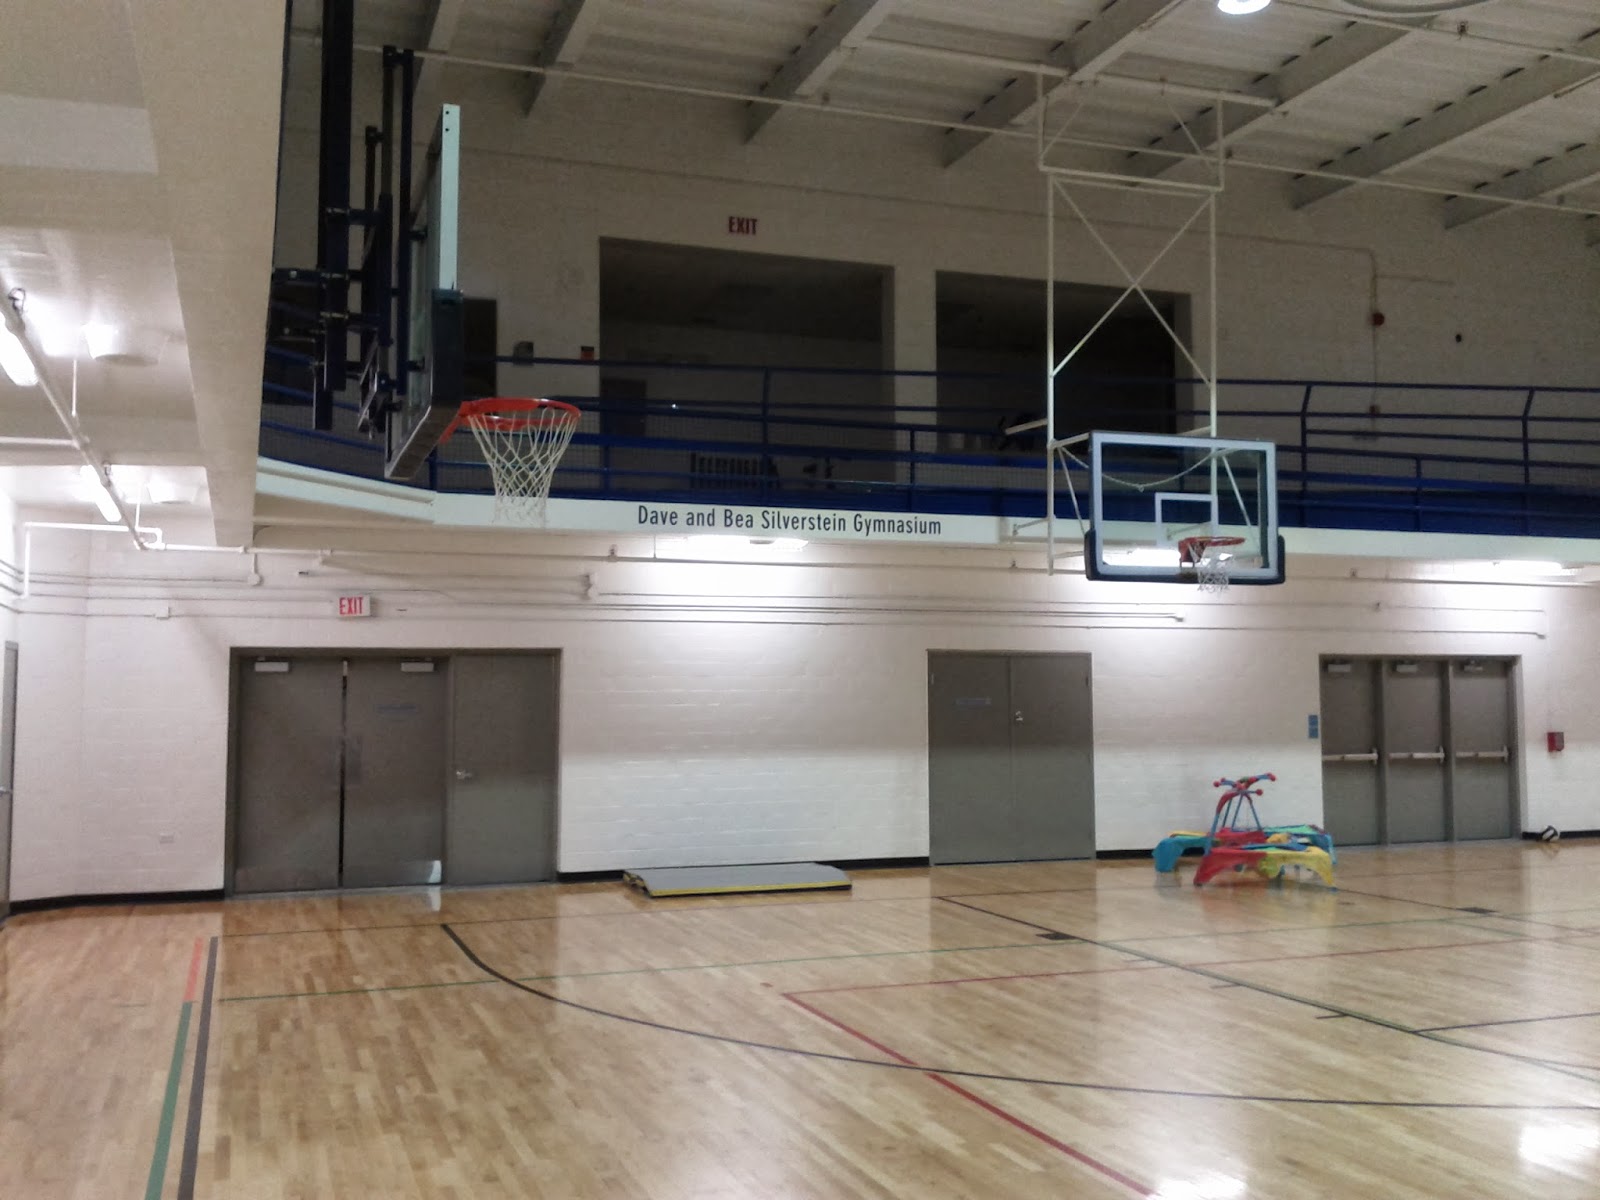 Toronto things: Dave and Bea Silverstein Gymnasium / Basketball court ...